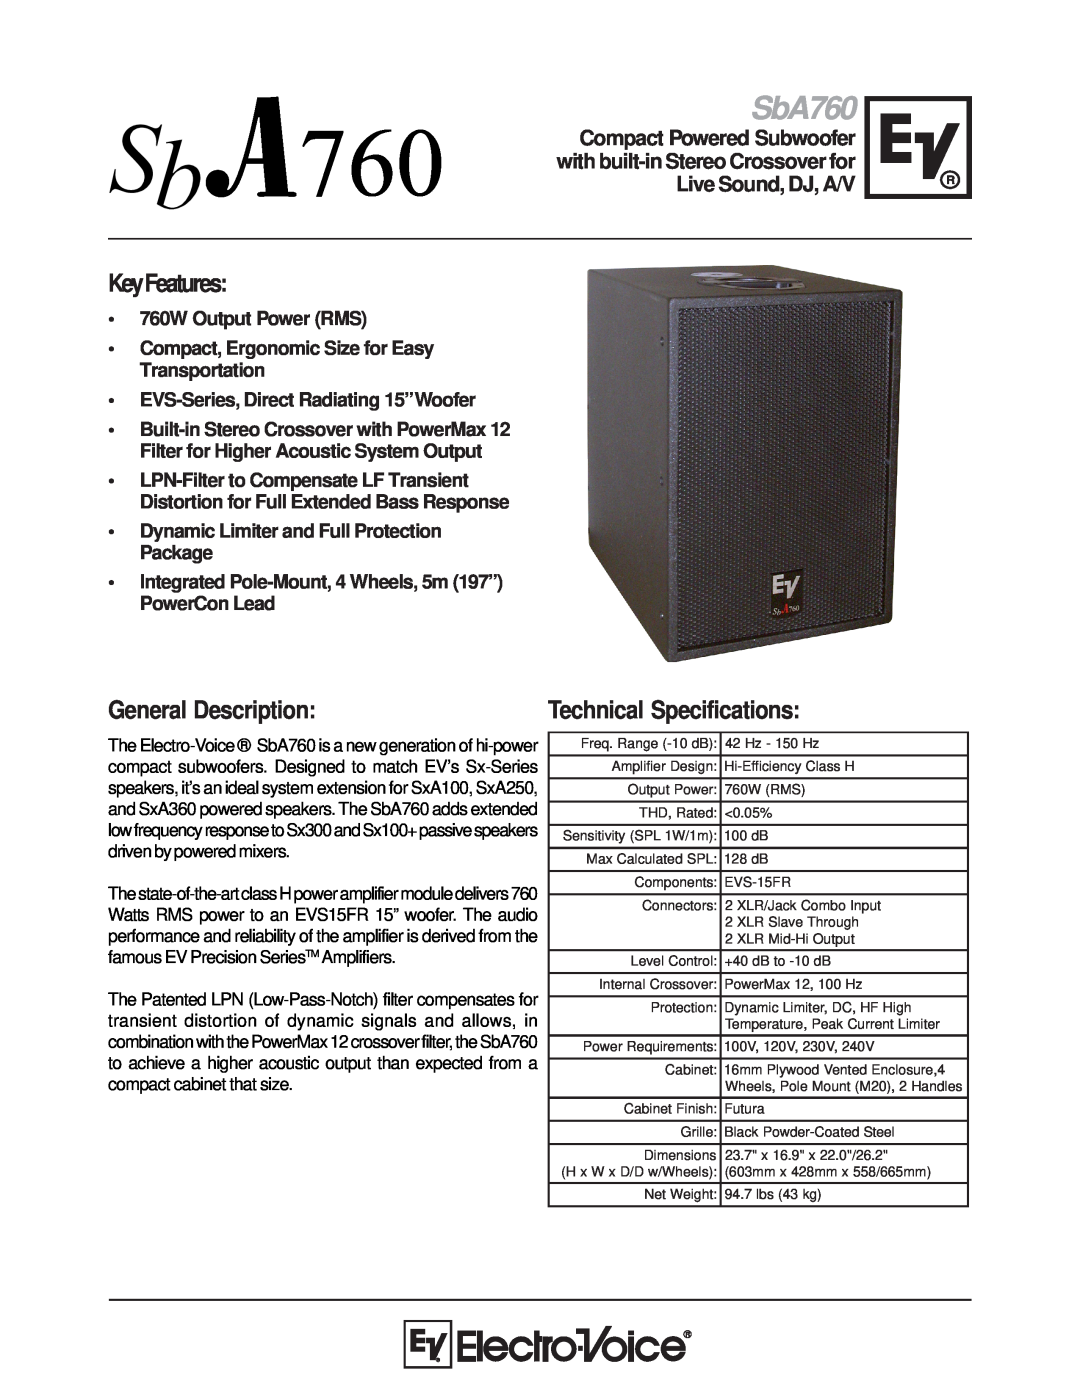 Electro-Voice SbA760 technical specifications KeyFeatures, General Description, 760W Output Power RMS 